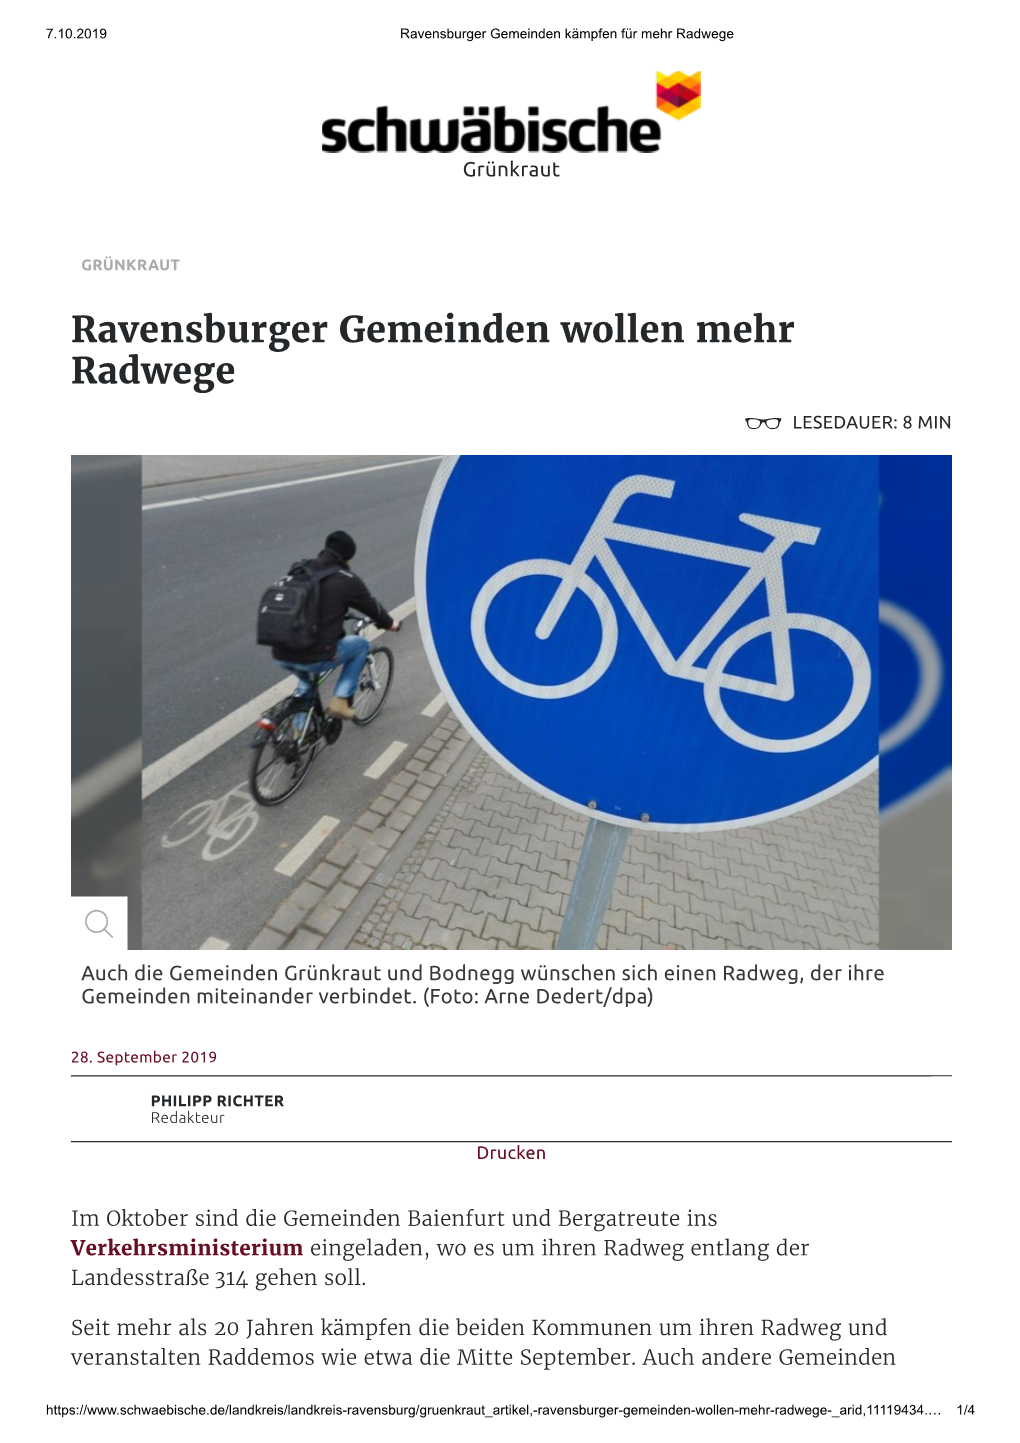 20190928 Szwg Ravensburger Radwege.Pdf